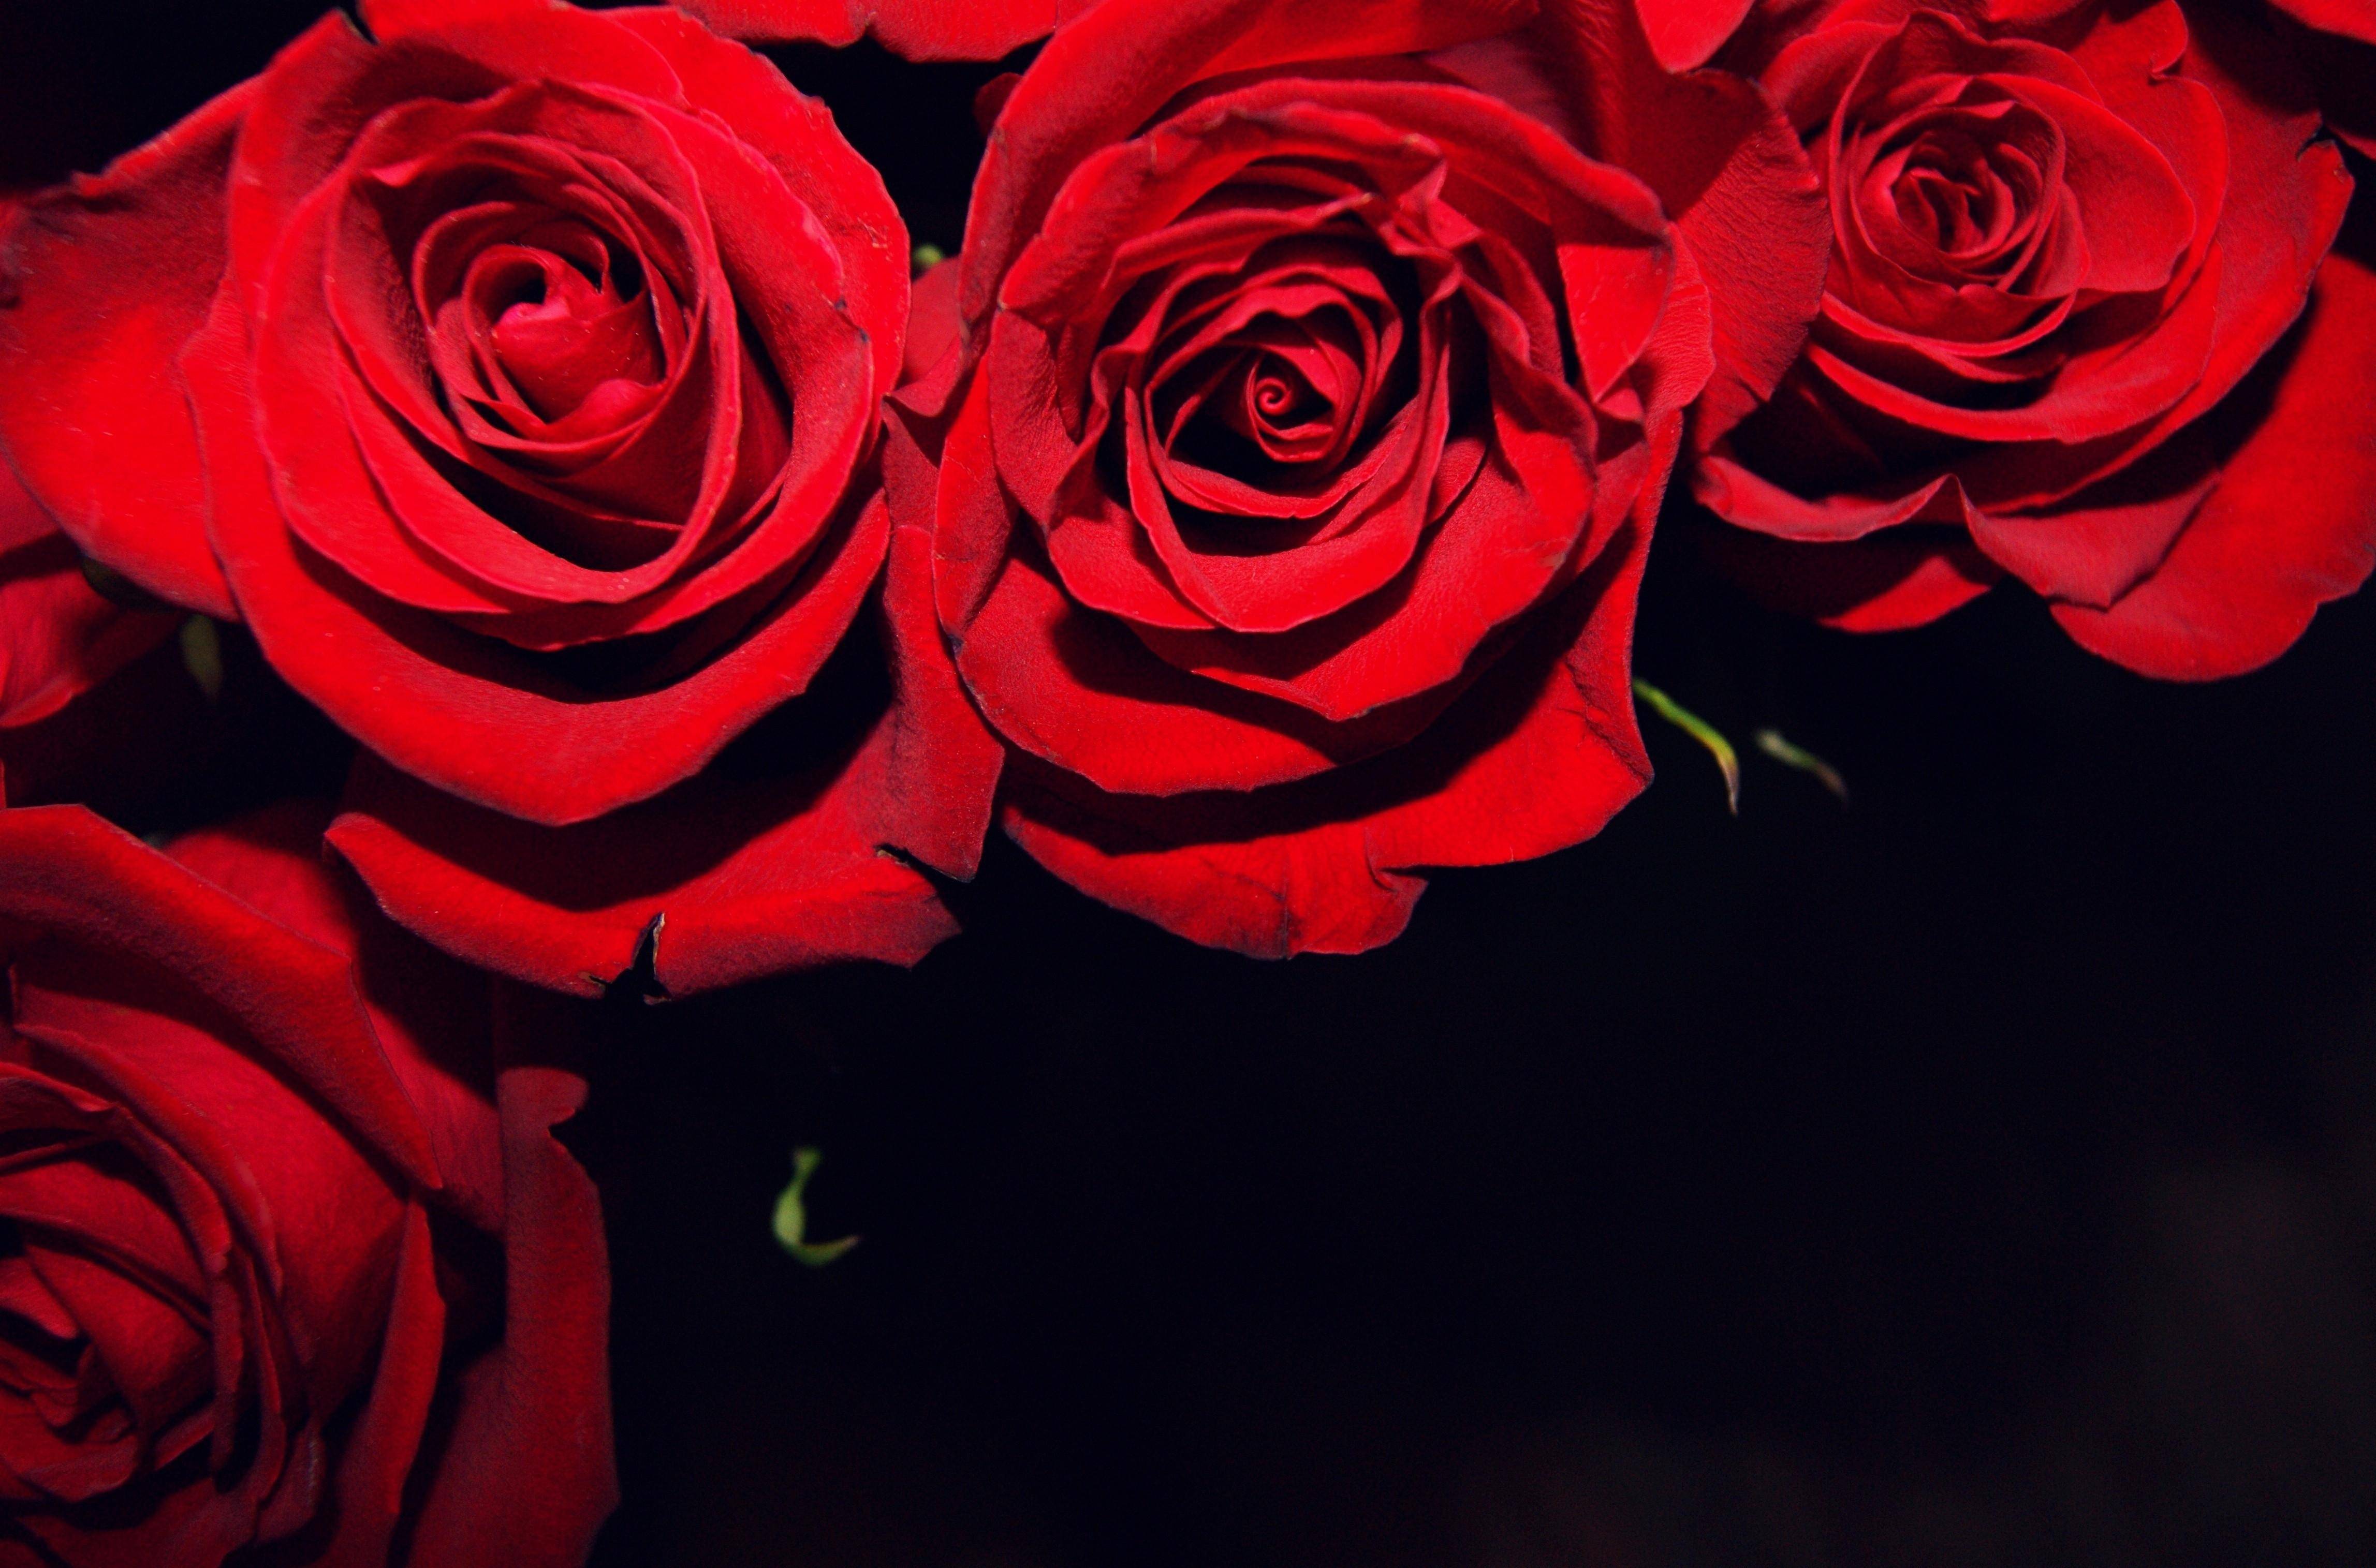 Red Rose With Black Background Hd Wallpaper - jolaritz.blogspot.com